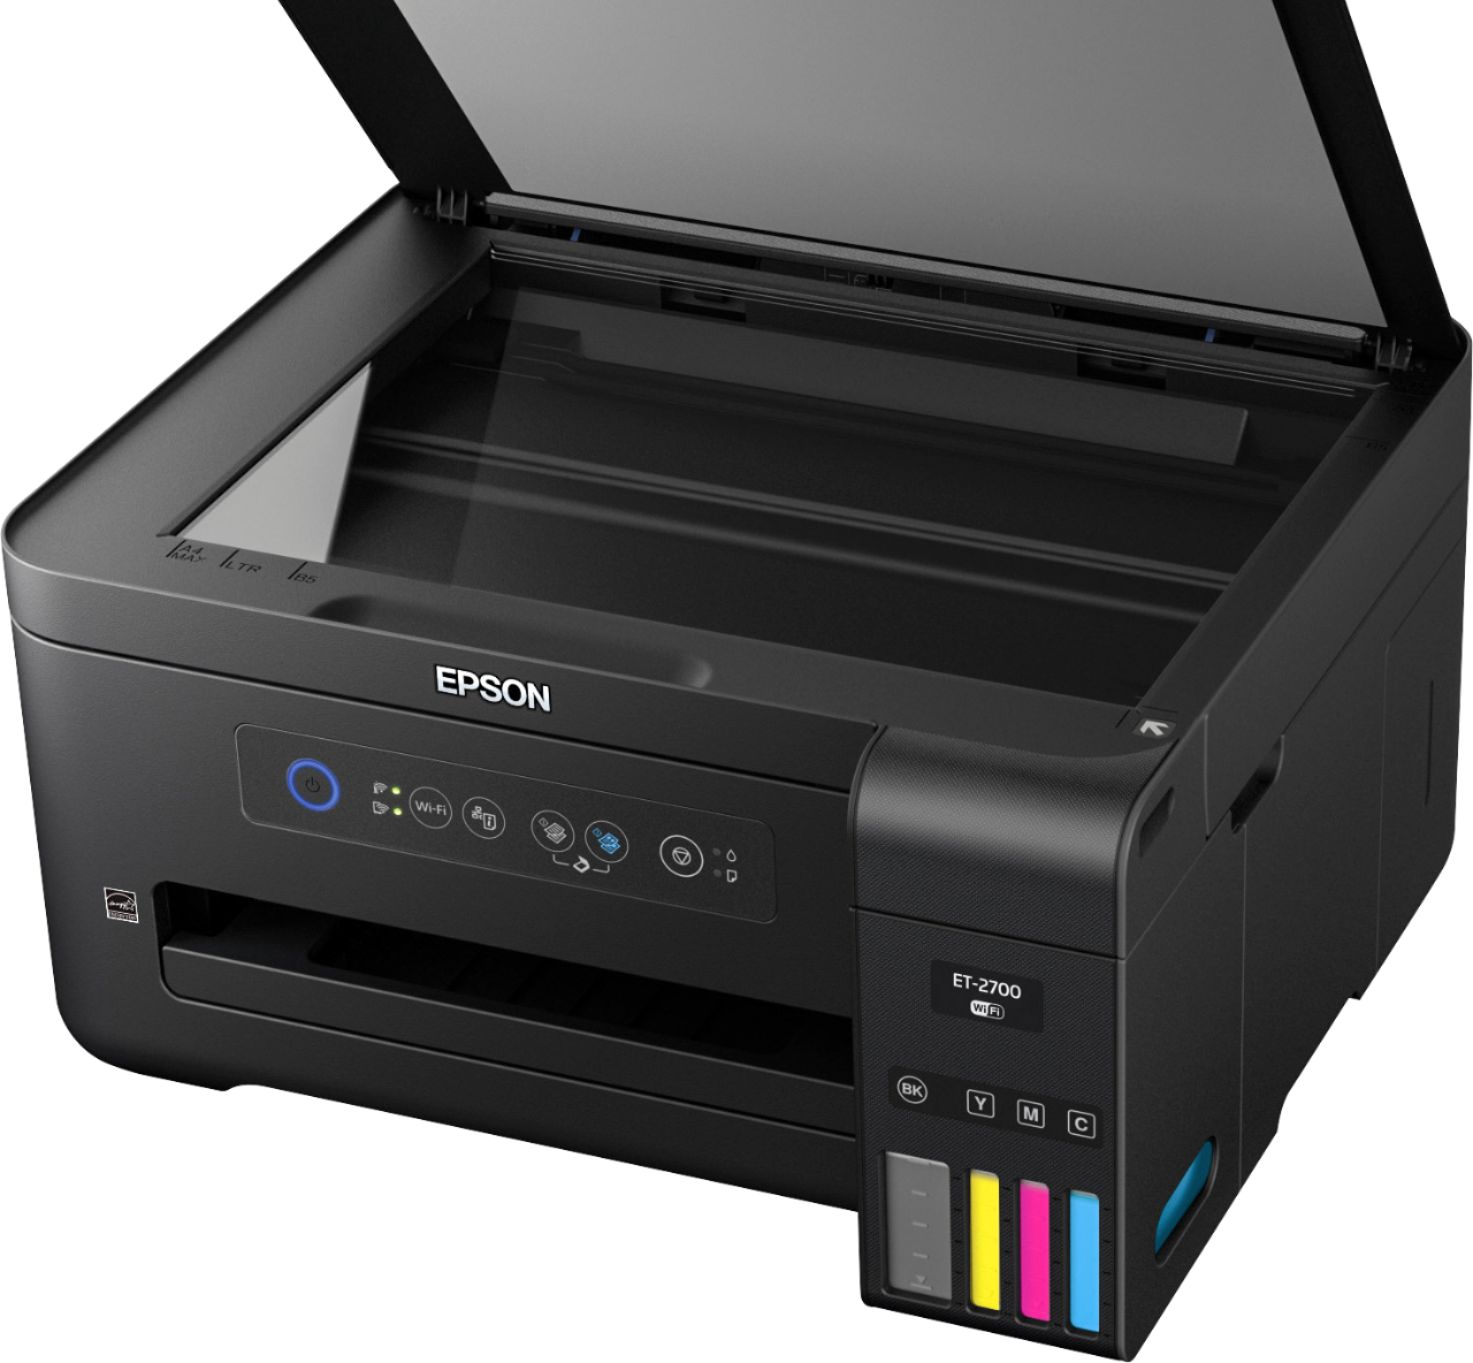 Best Buy: Expression Wireless All-in-One Inkjet Printer Black ET 2700